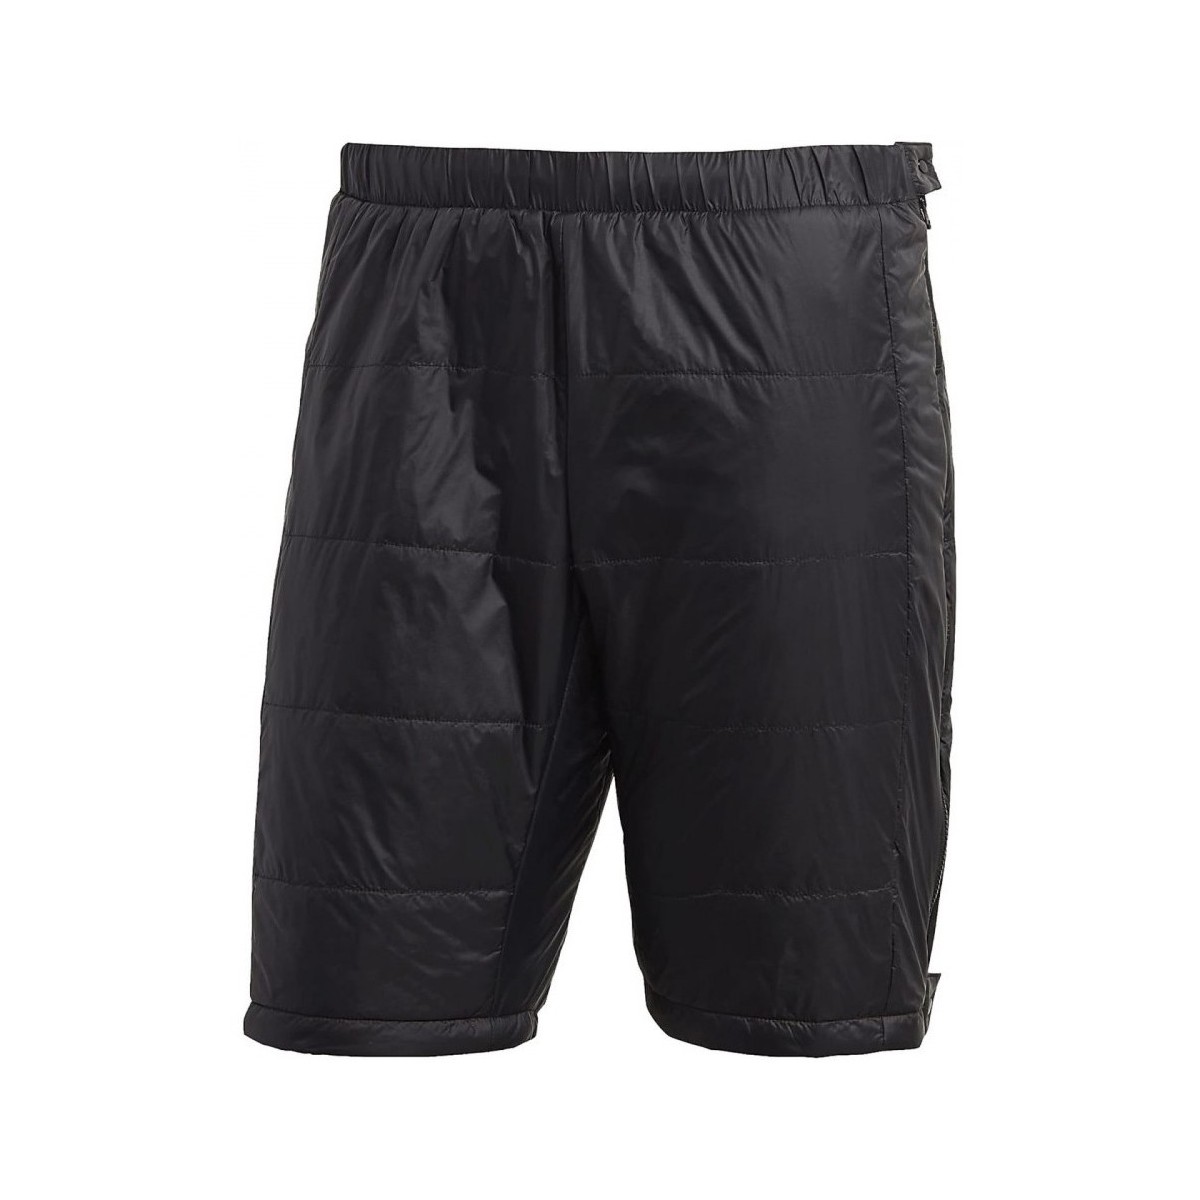 Textil Homem Shorts / Bermudas adidas Originals Tx Ins Short Preto